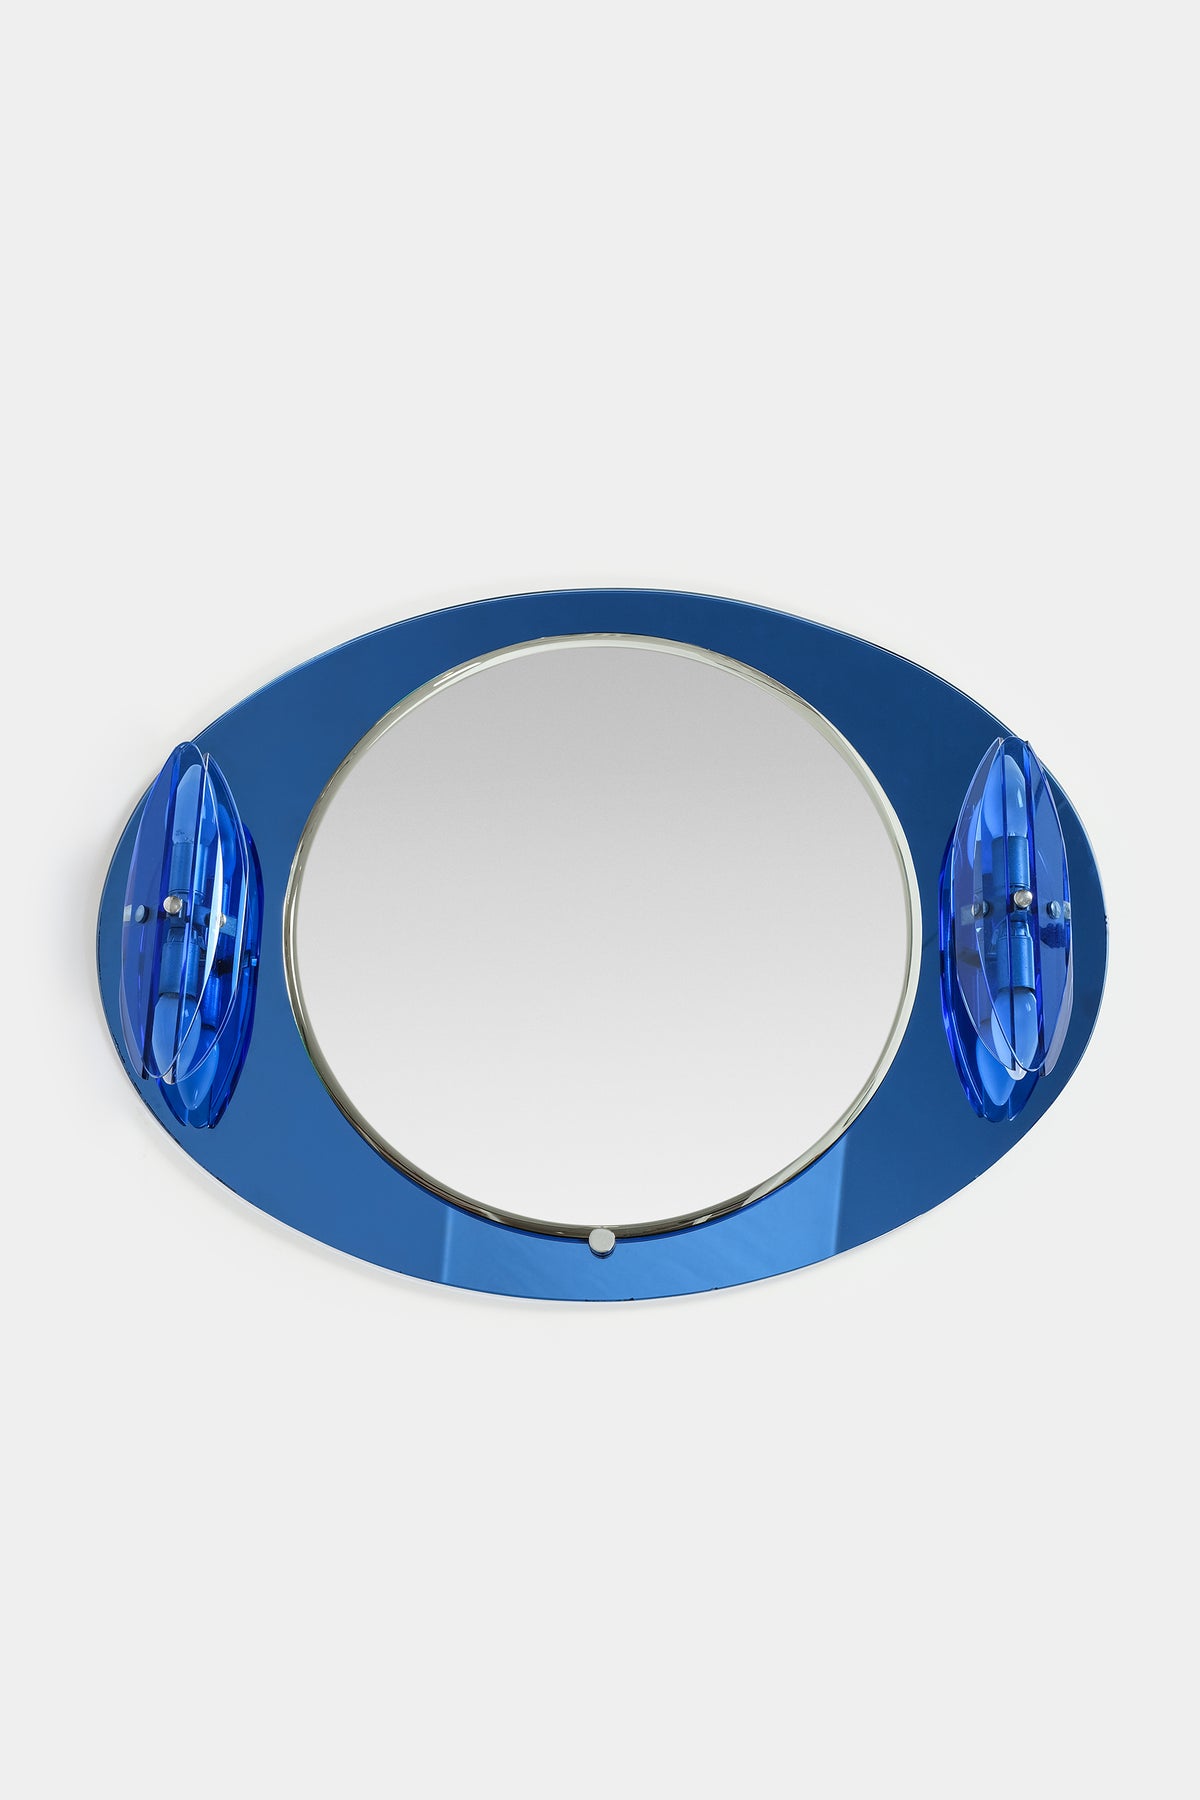 Italian Veca cobalt mirror with two lights 1970